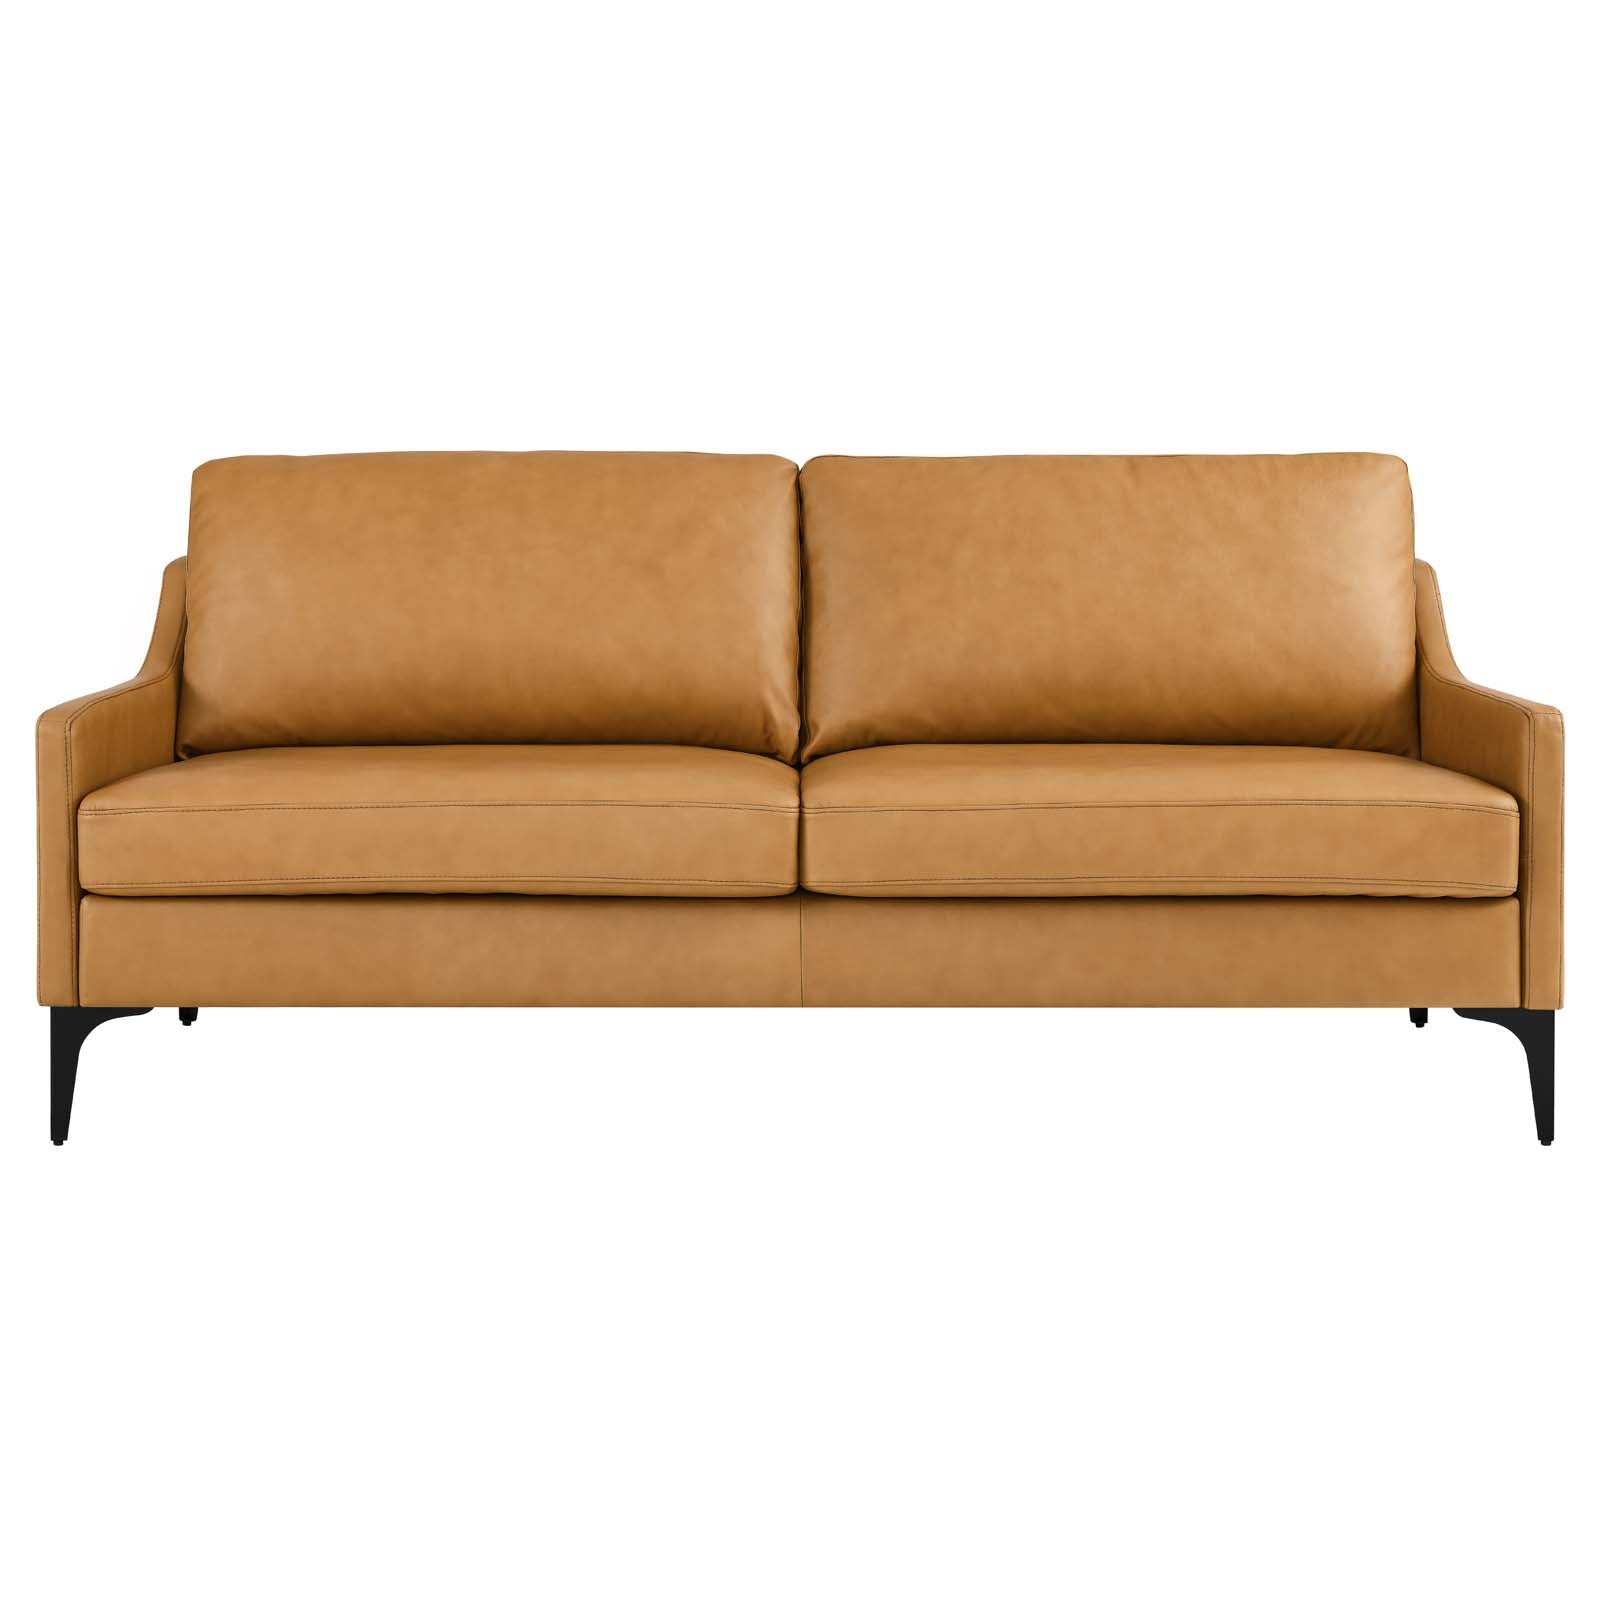 Corland Leather Sofa - East Shore Modern Home Furnishings